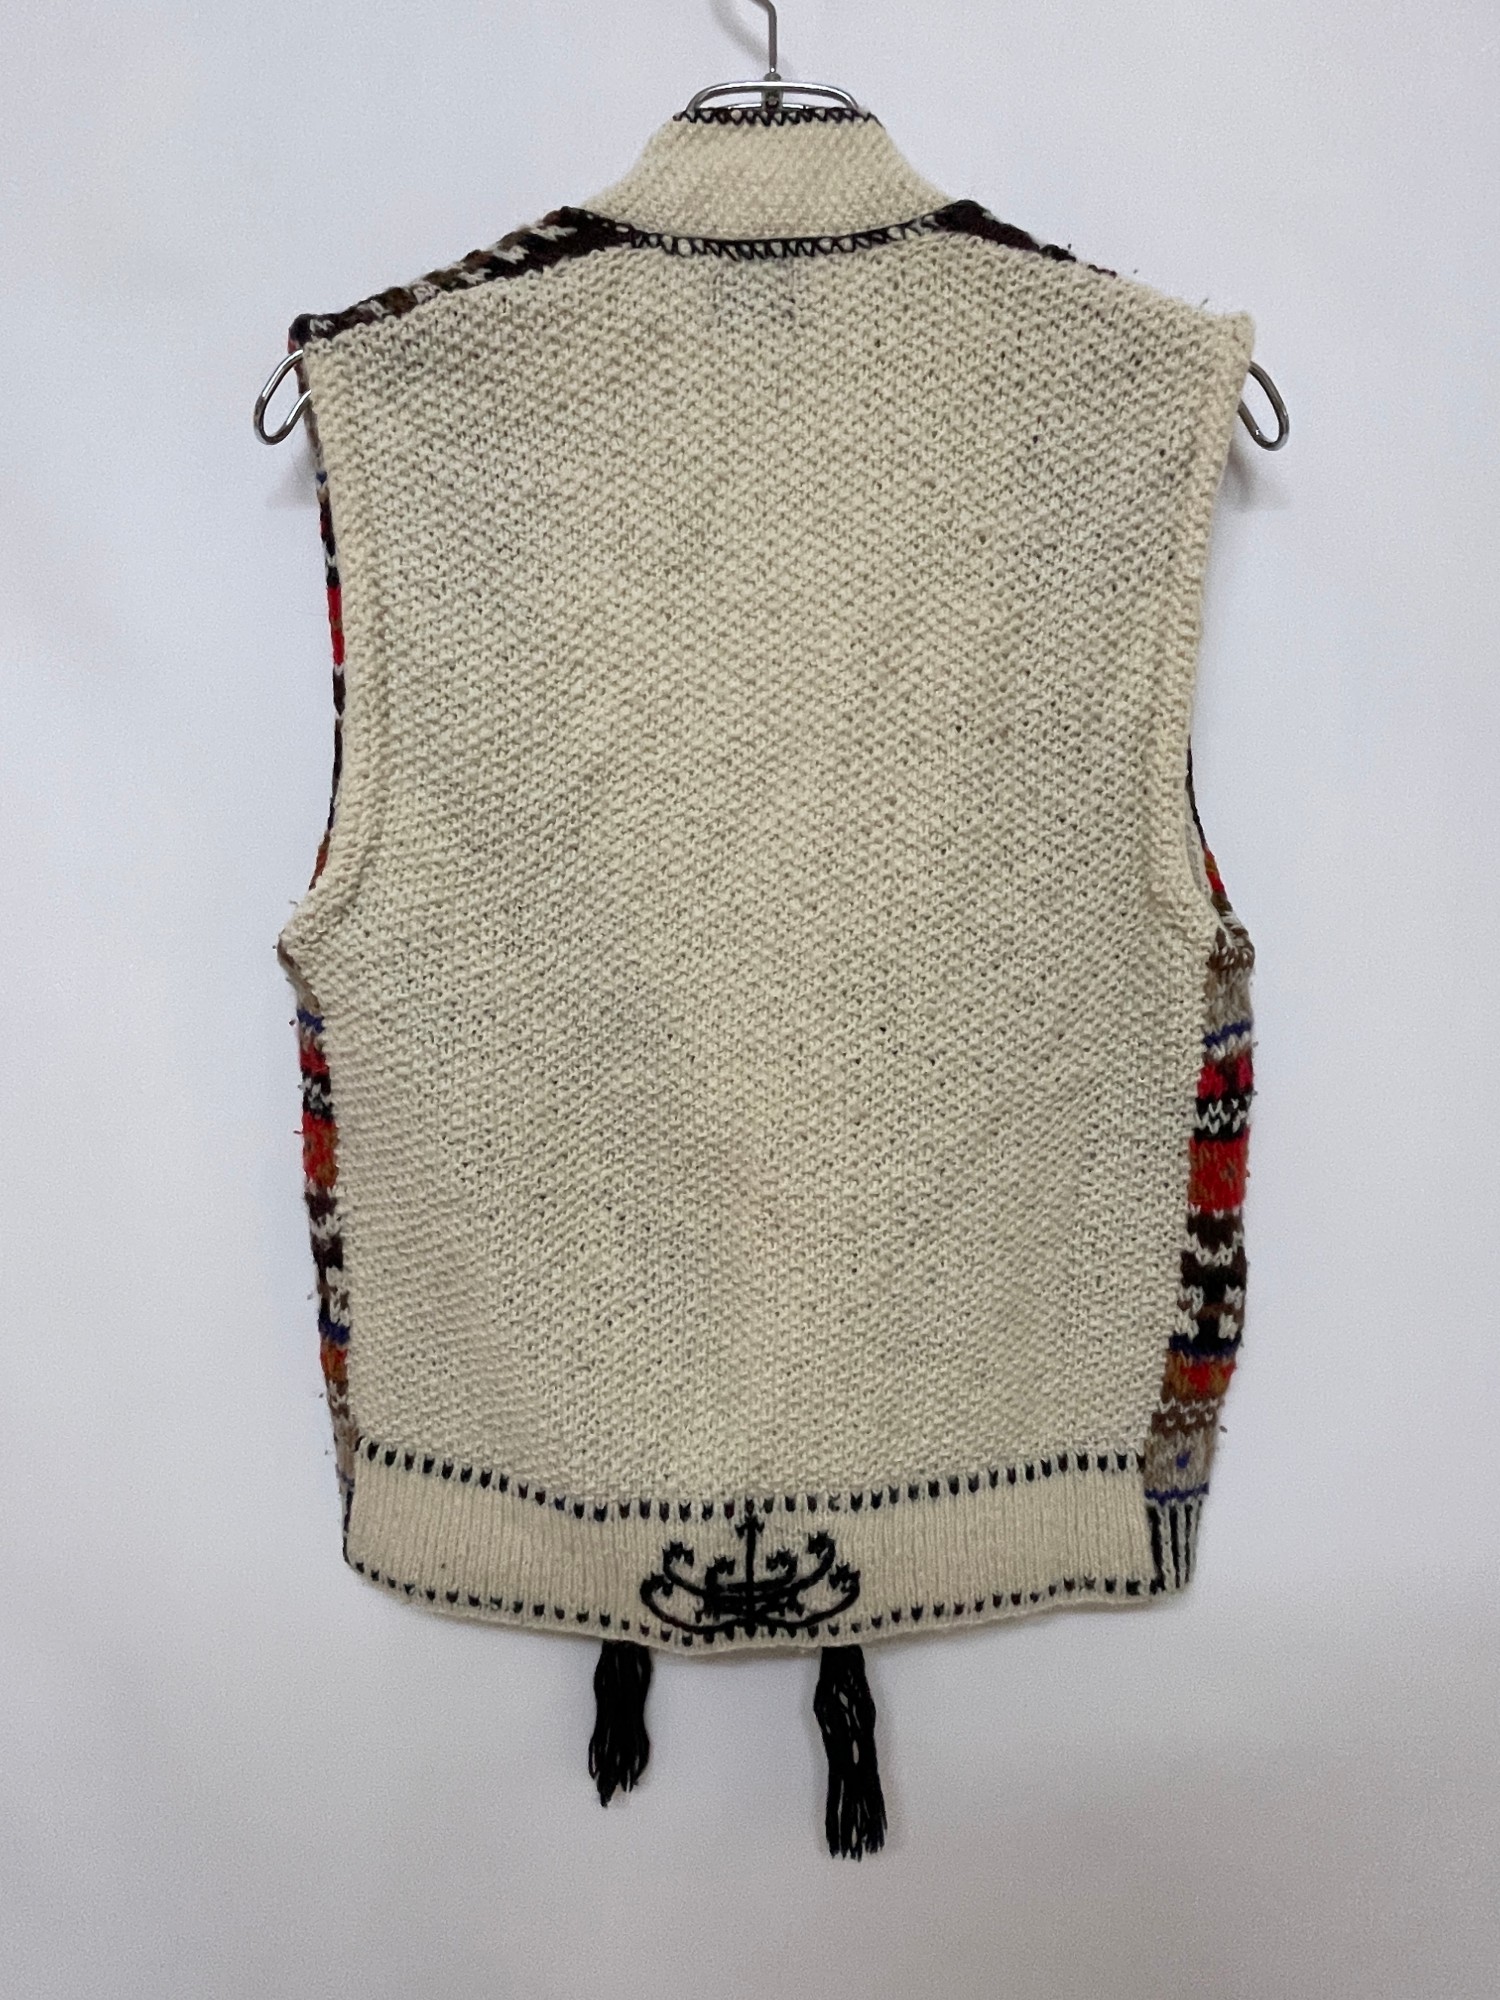 nostalgic vest knit